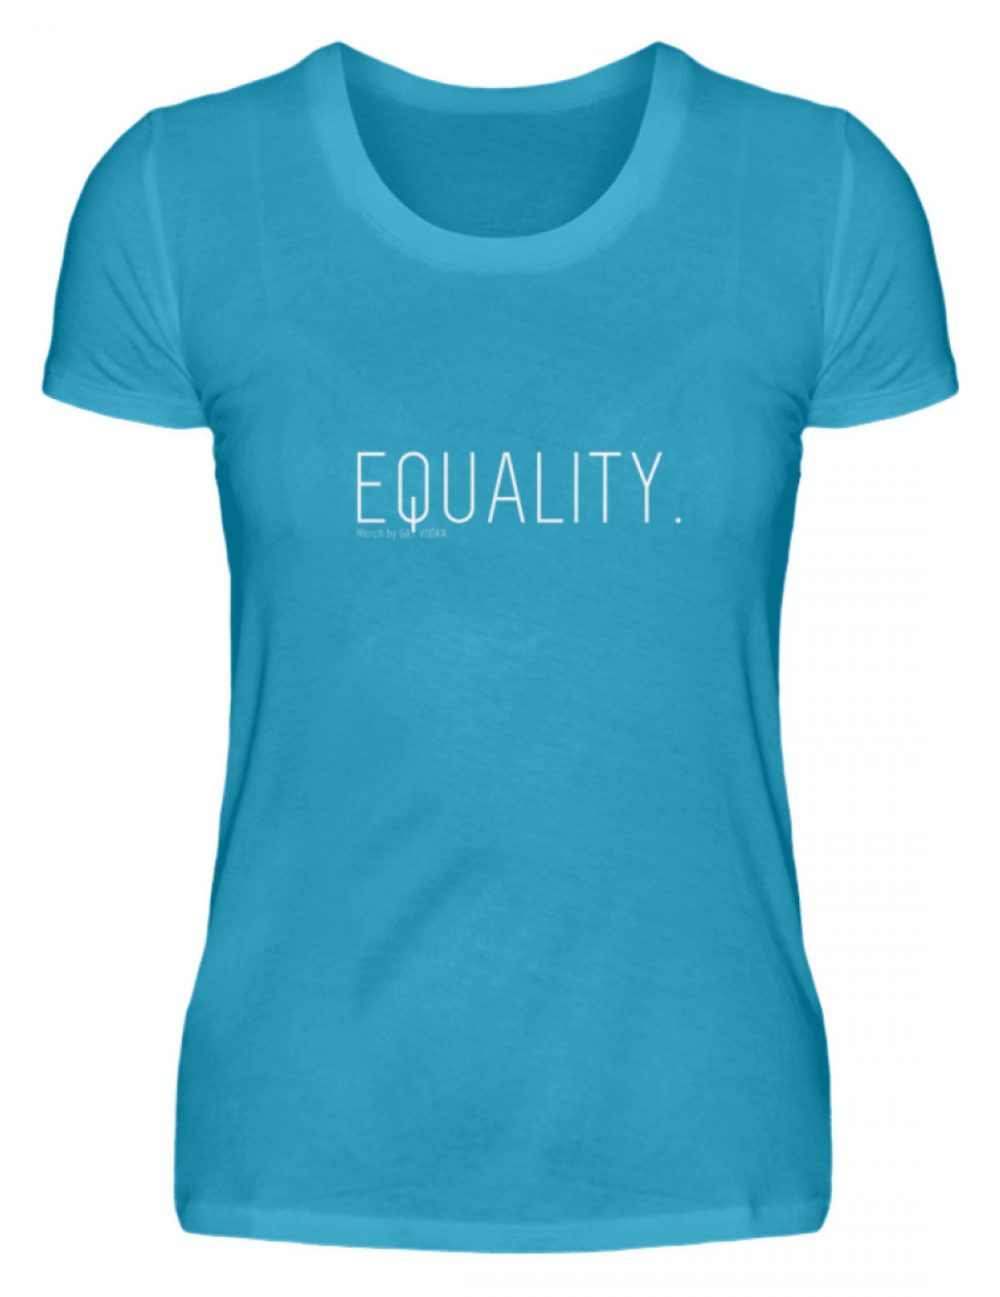 EQUALITY. - Damen Premiumshirt-3175